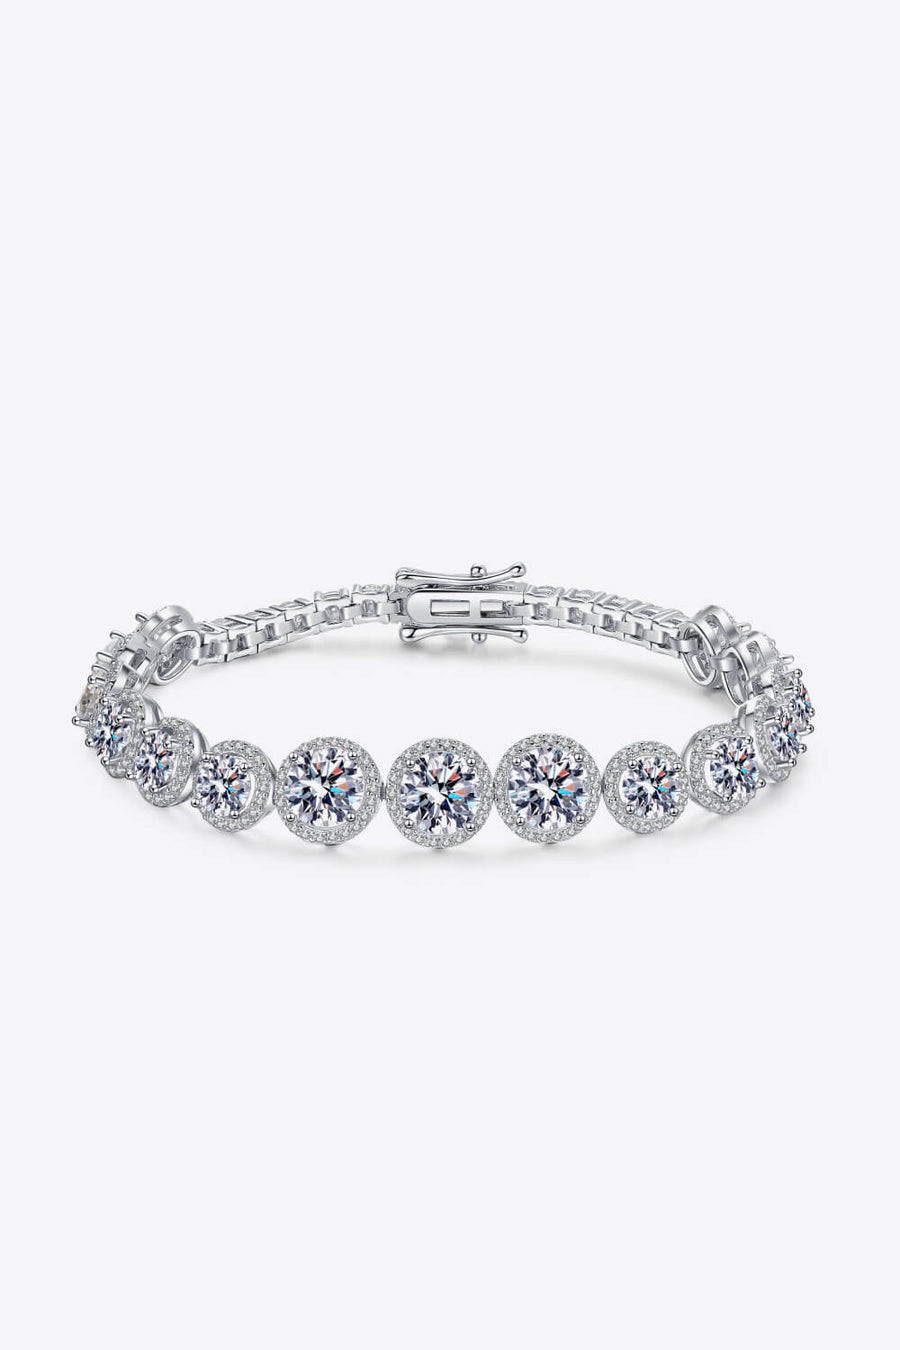 Best Diamond Jewelry Bundle Set Gift | Best Floral Diamond Necklace, Earrings, Bracelet Jewelry Gift for Women, Mother, Wife, Daughter | MASON New York